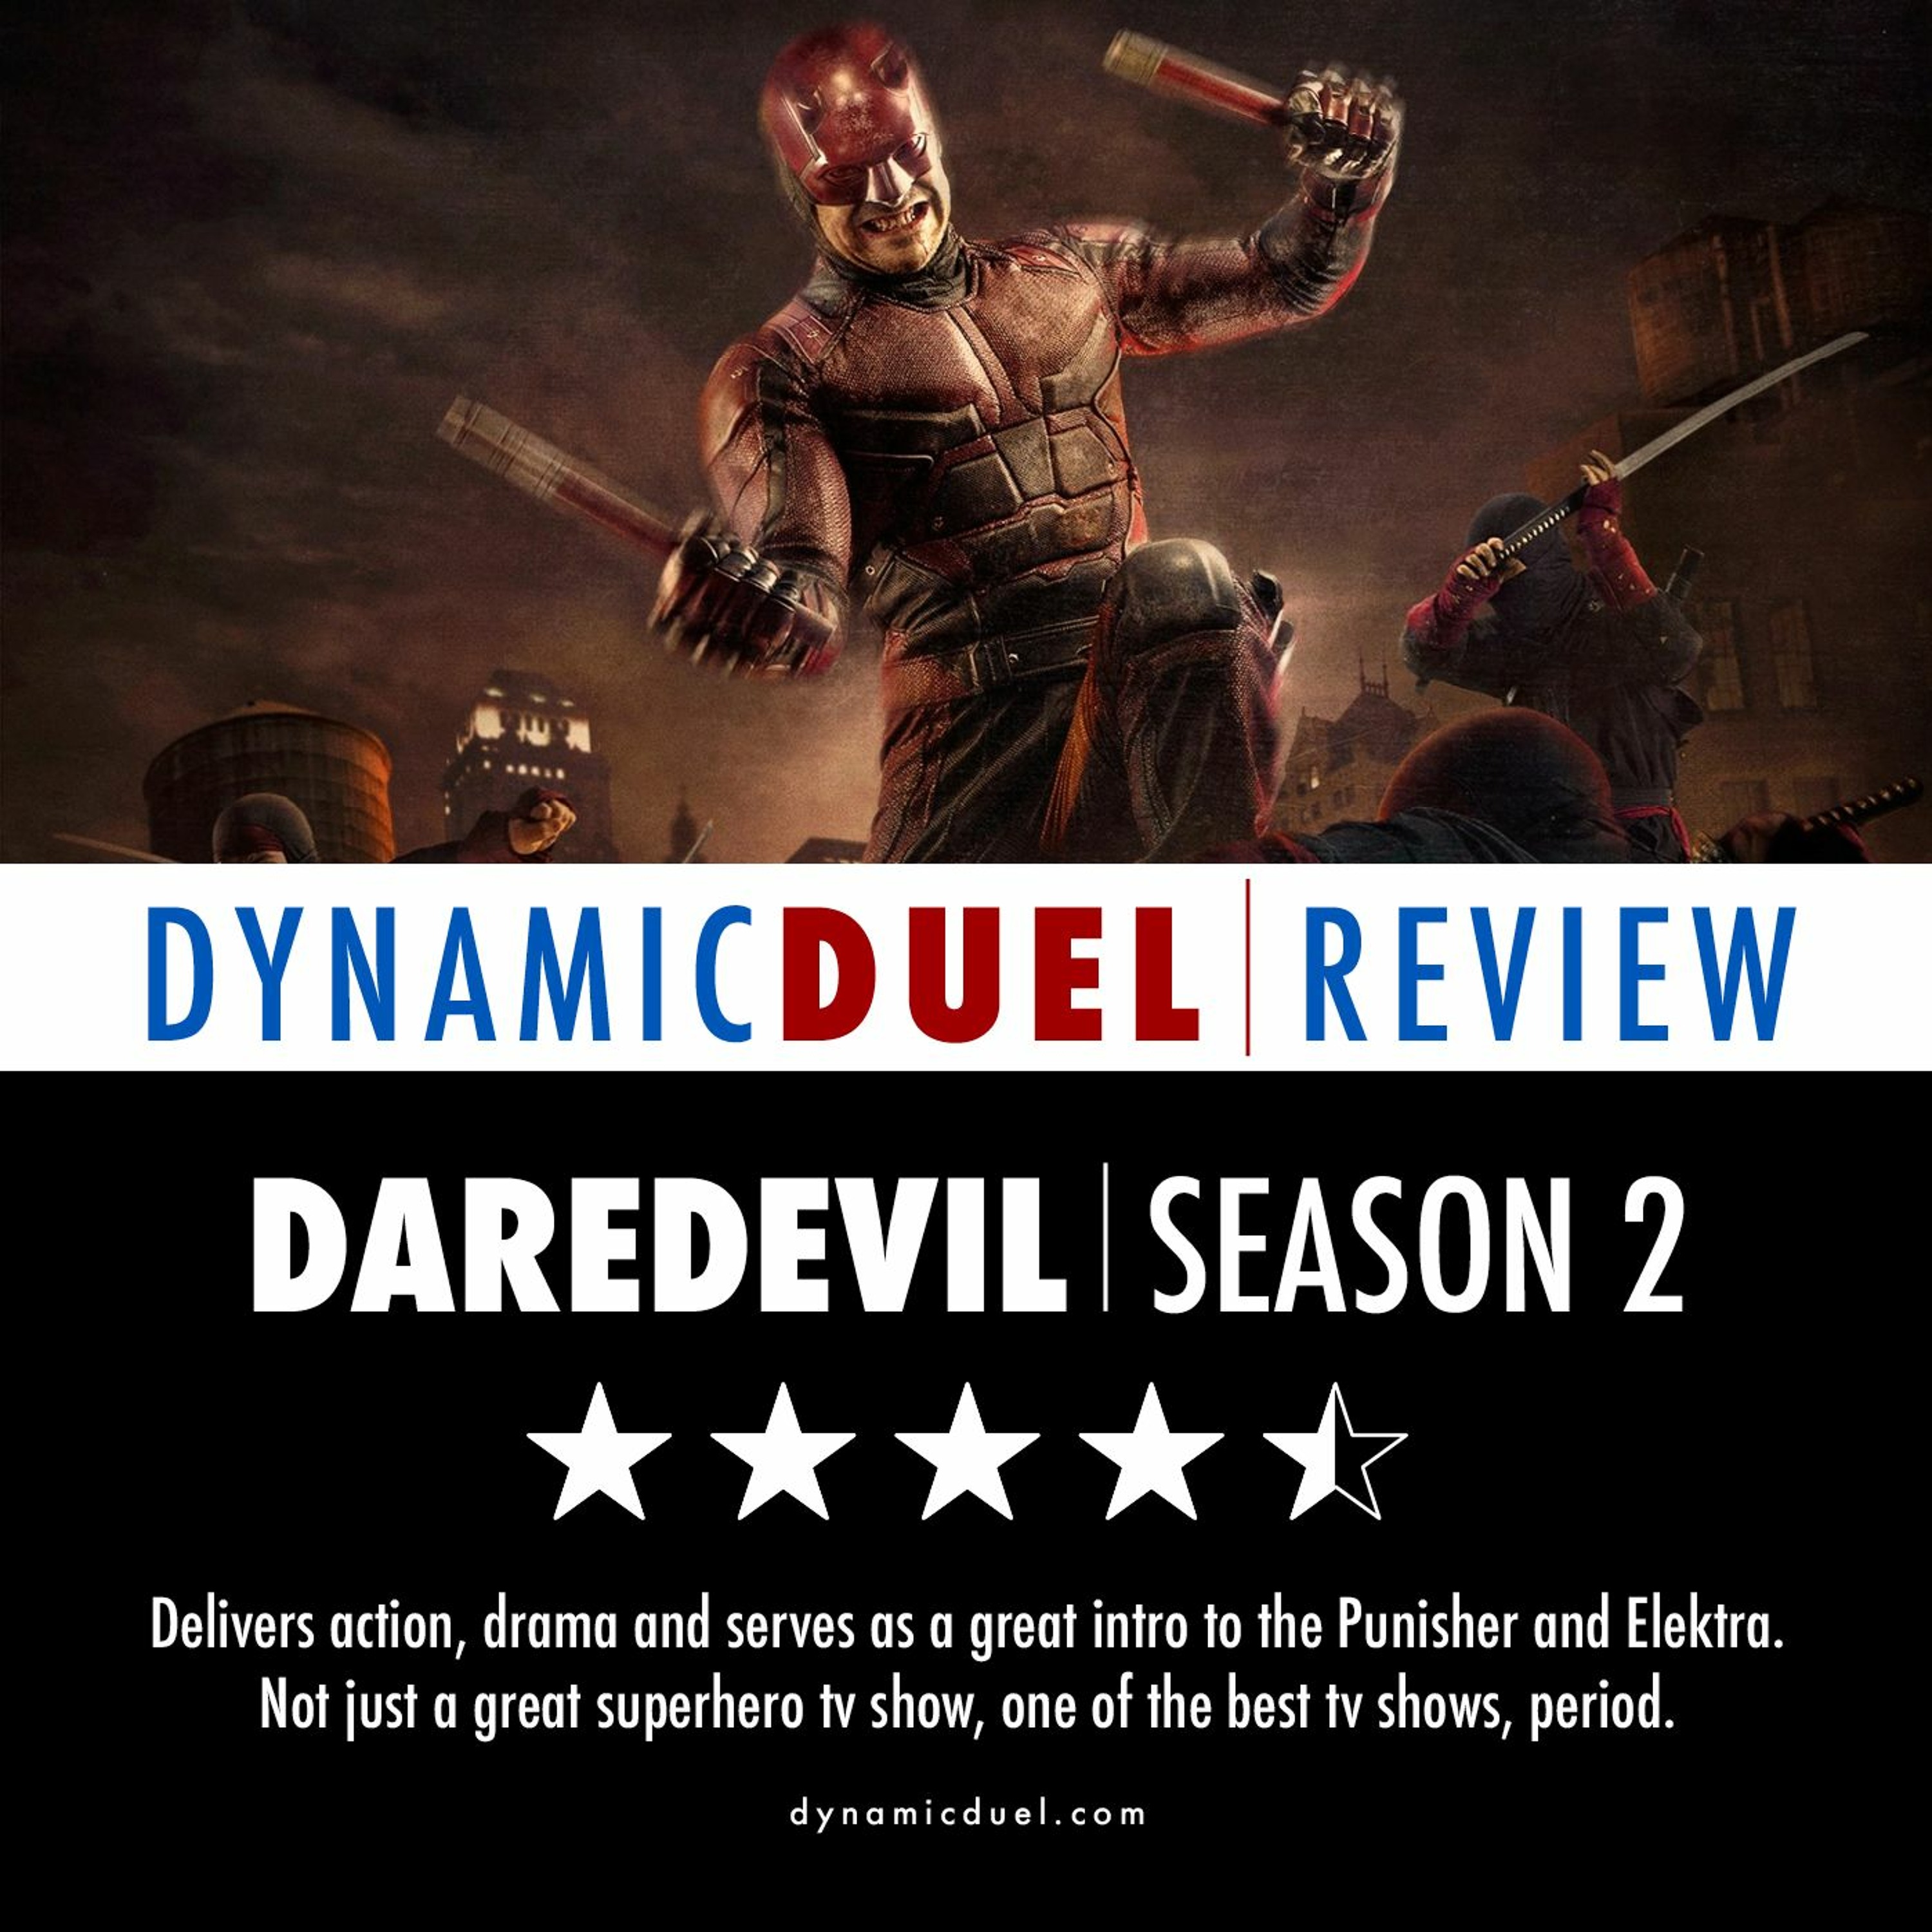 Daredevil Season 2 Review Image